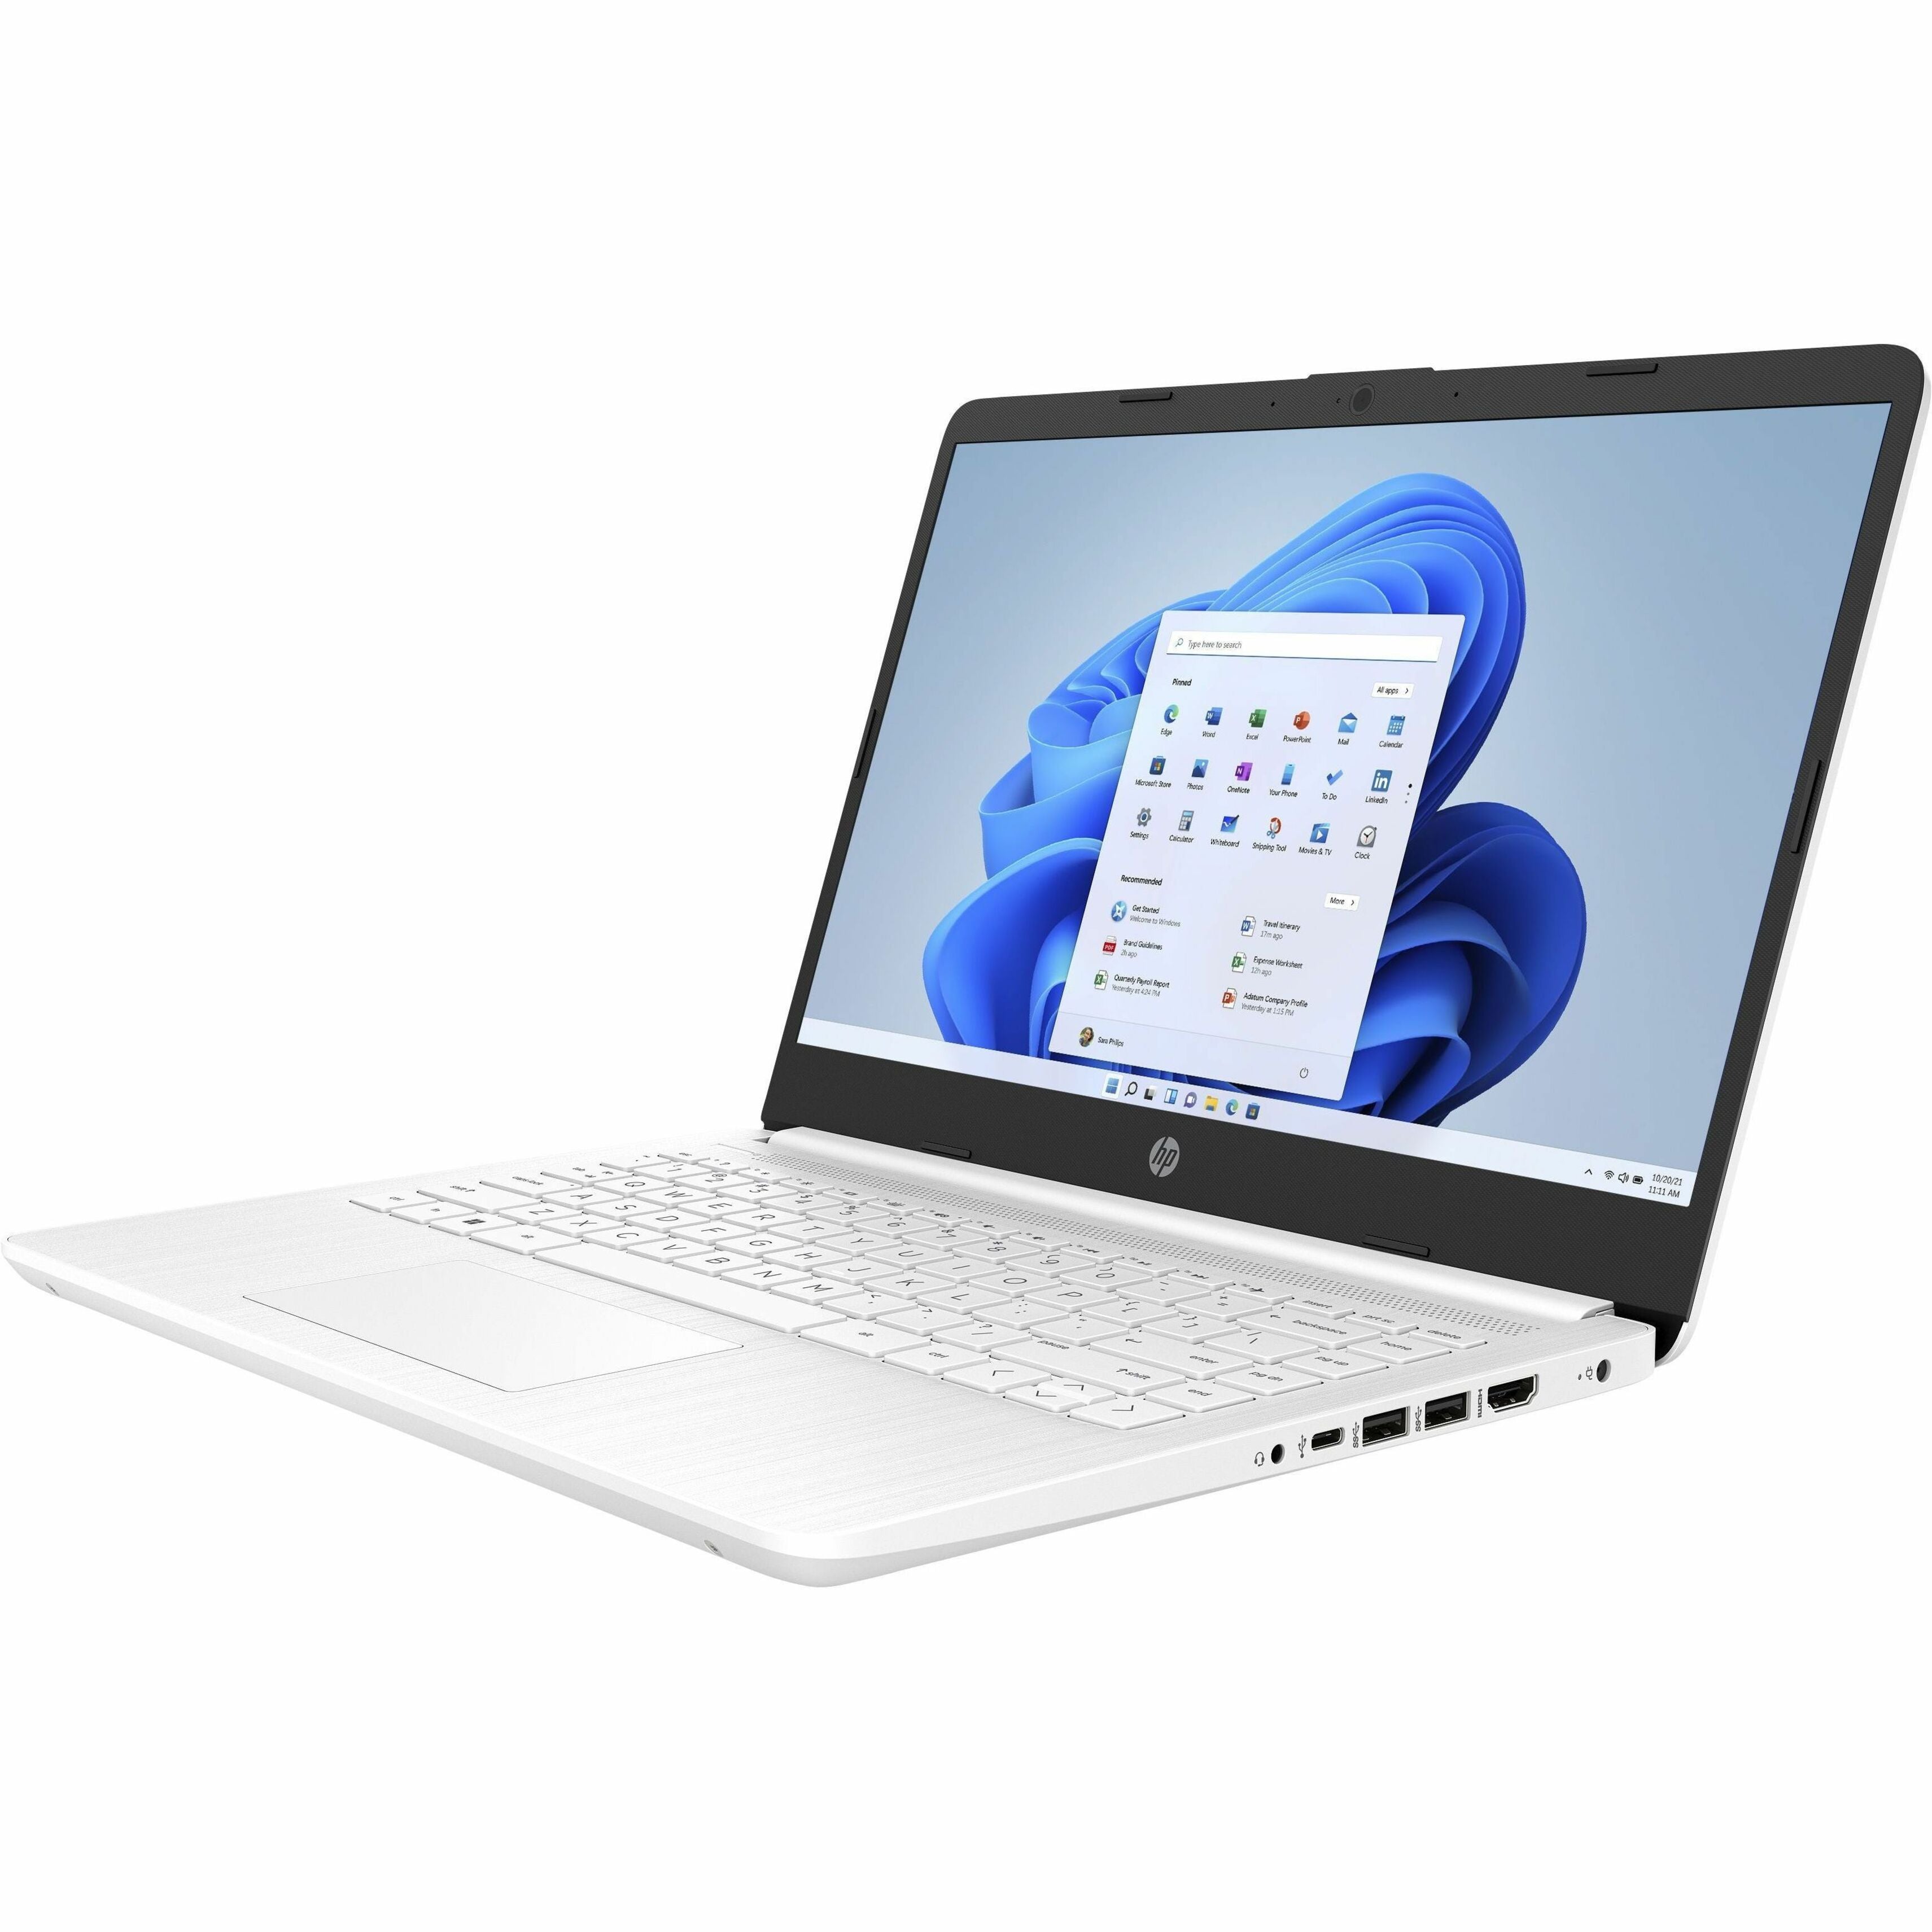 HP Laptop 14-dq0080nr 14 Touchscreen Notebook, Intel Celeron N4020, 4GB RAM, 64GB Flash Memory, Windows 10 Home in S mode